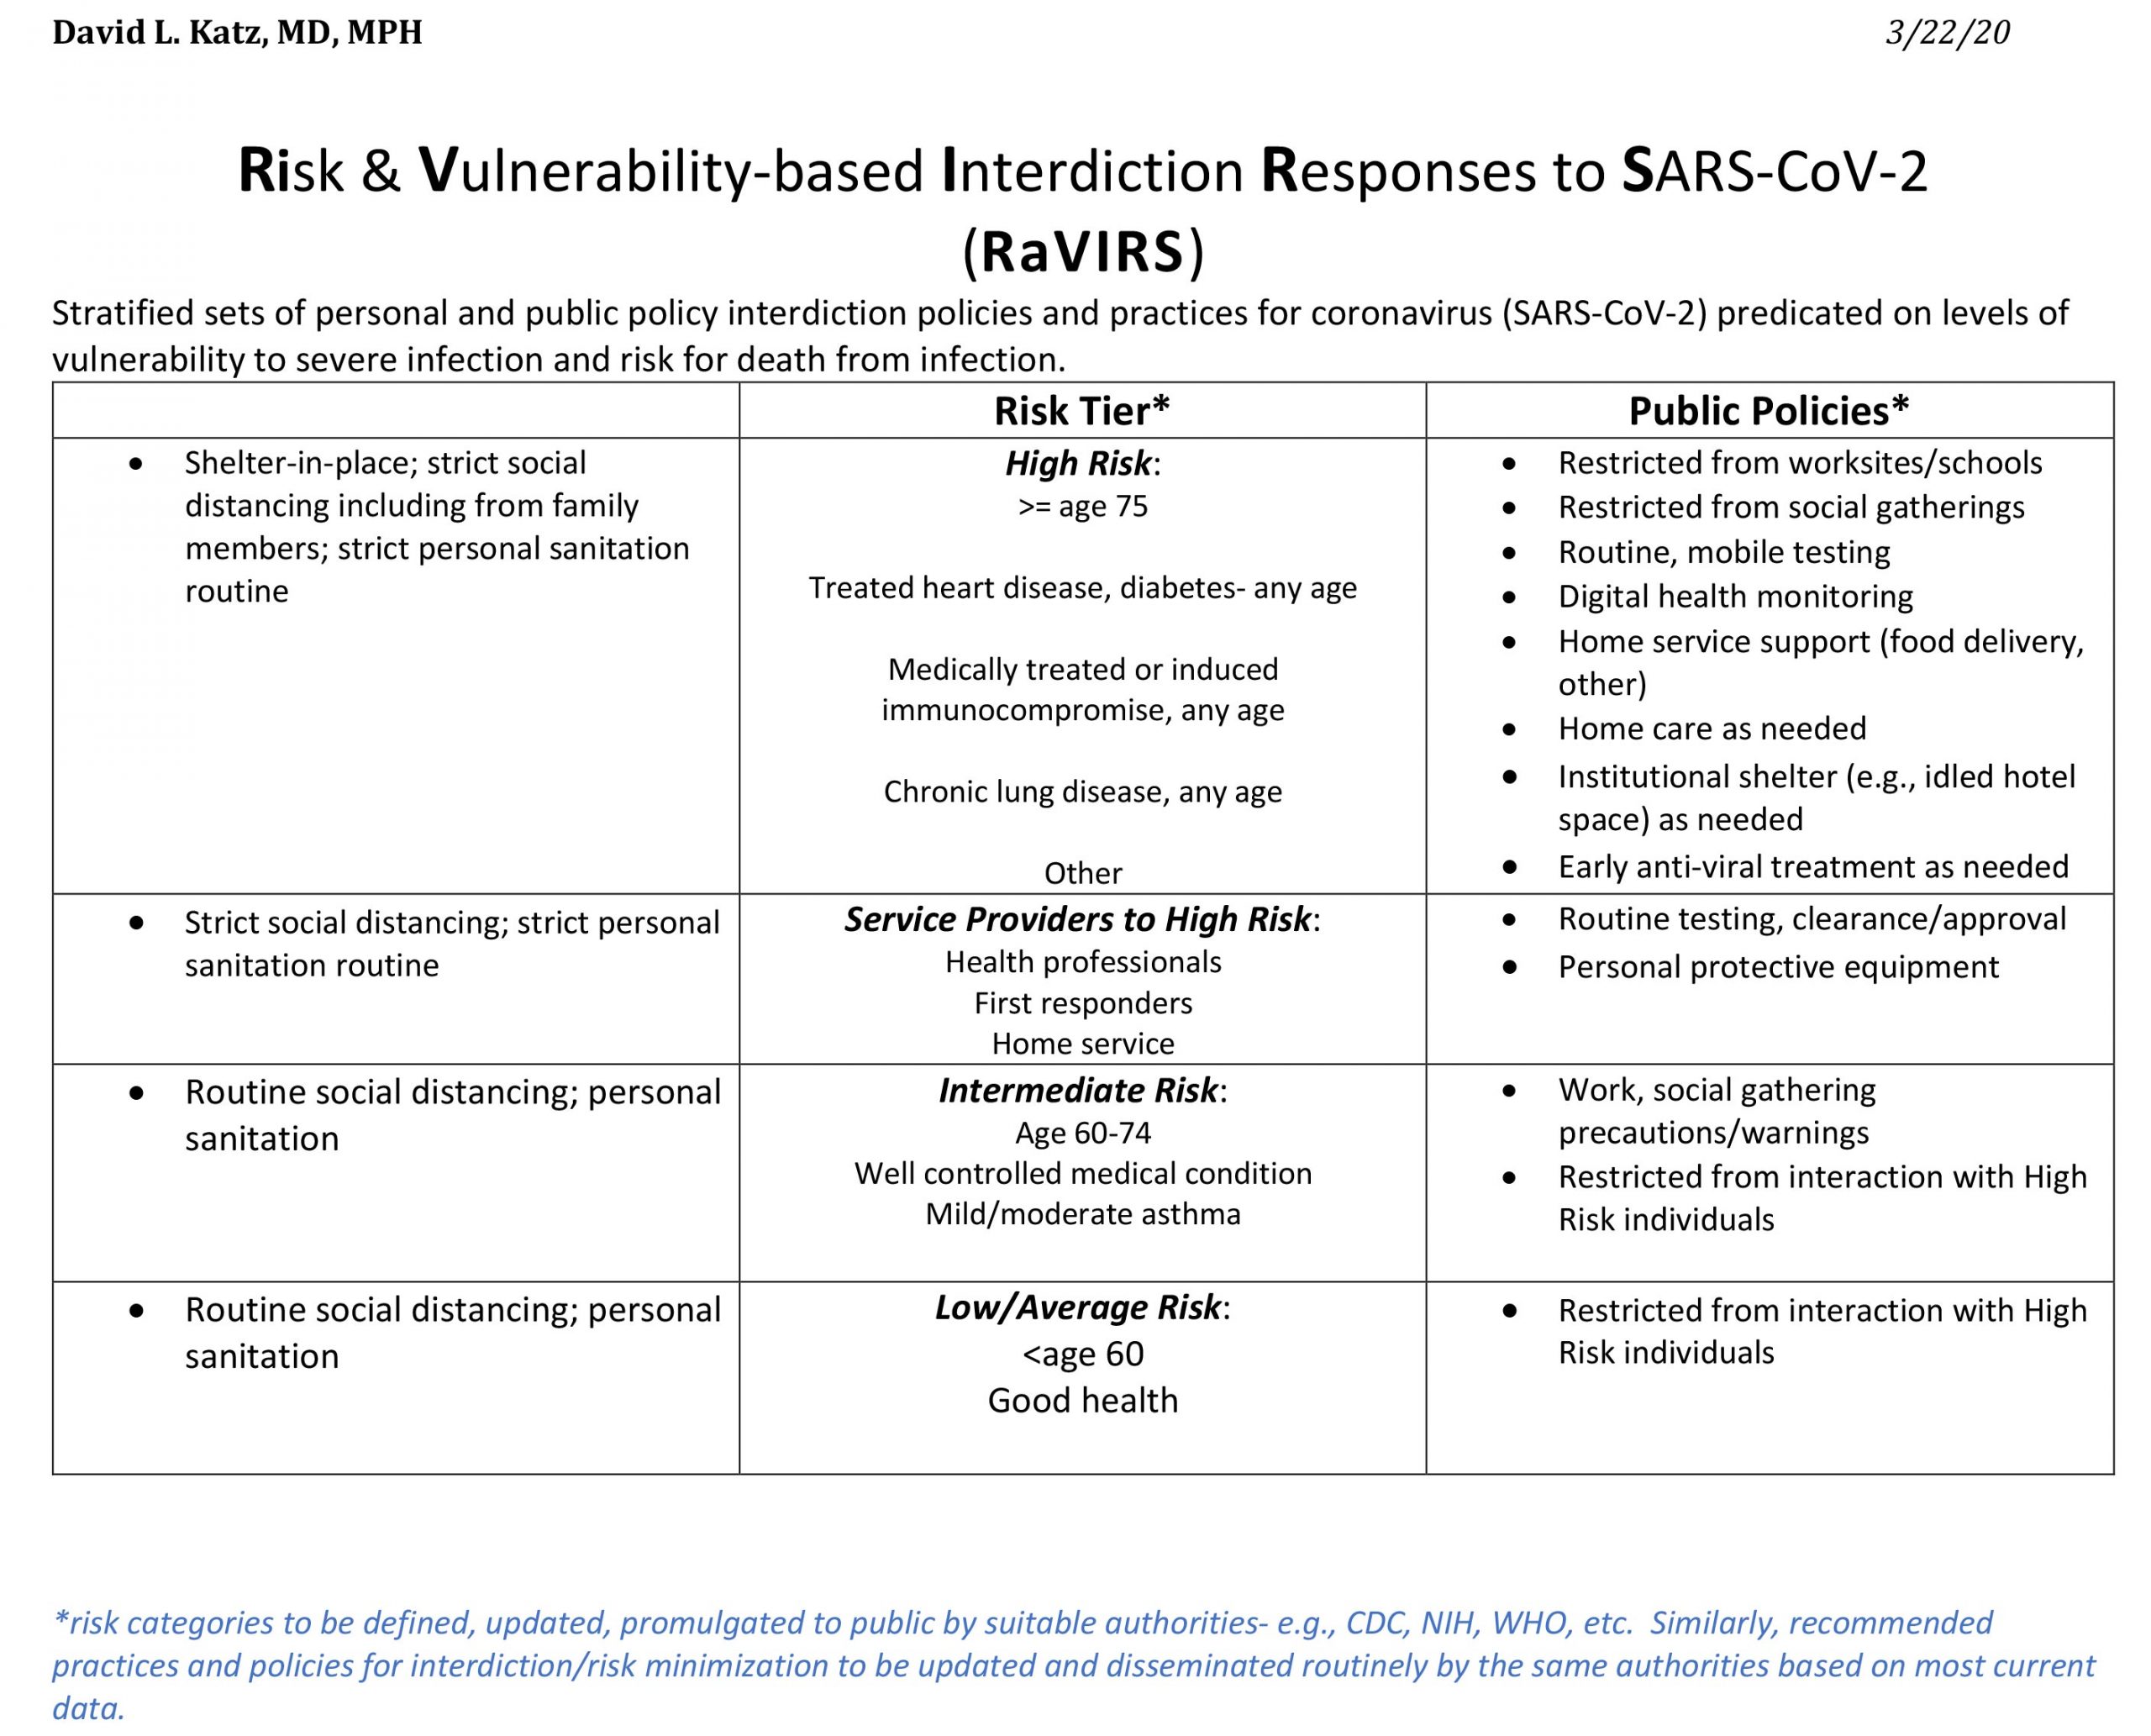 Table: Risk & Vulnerability-based Interdiction Responses to SARS-CoV-2 (RaVIRS)